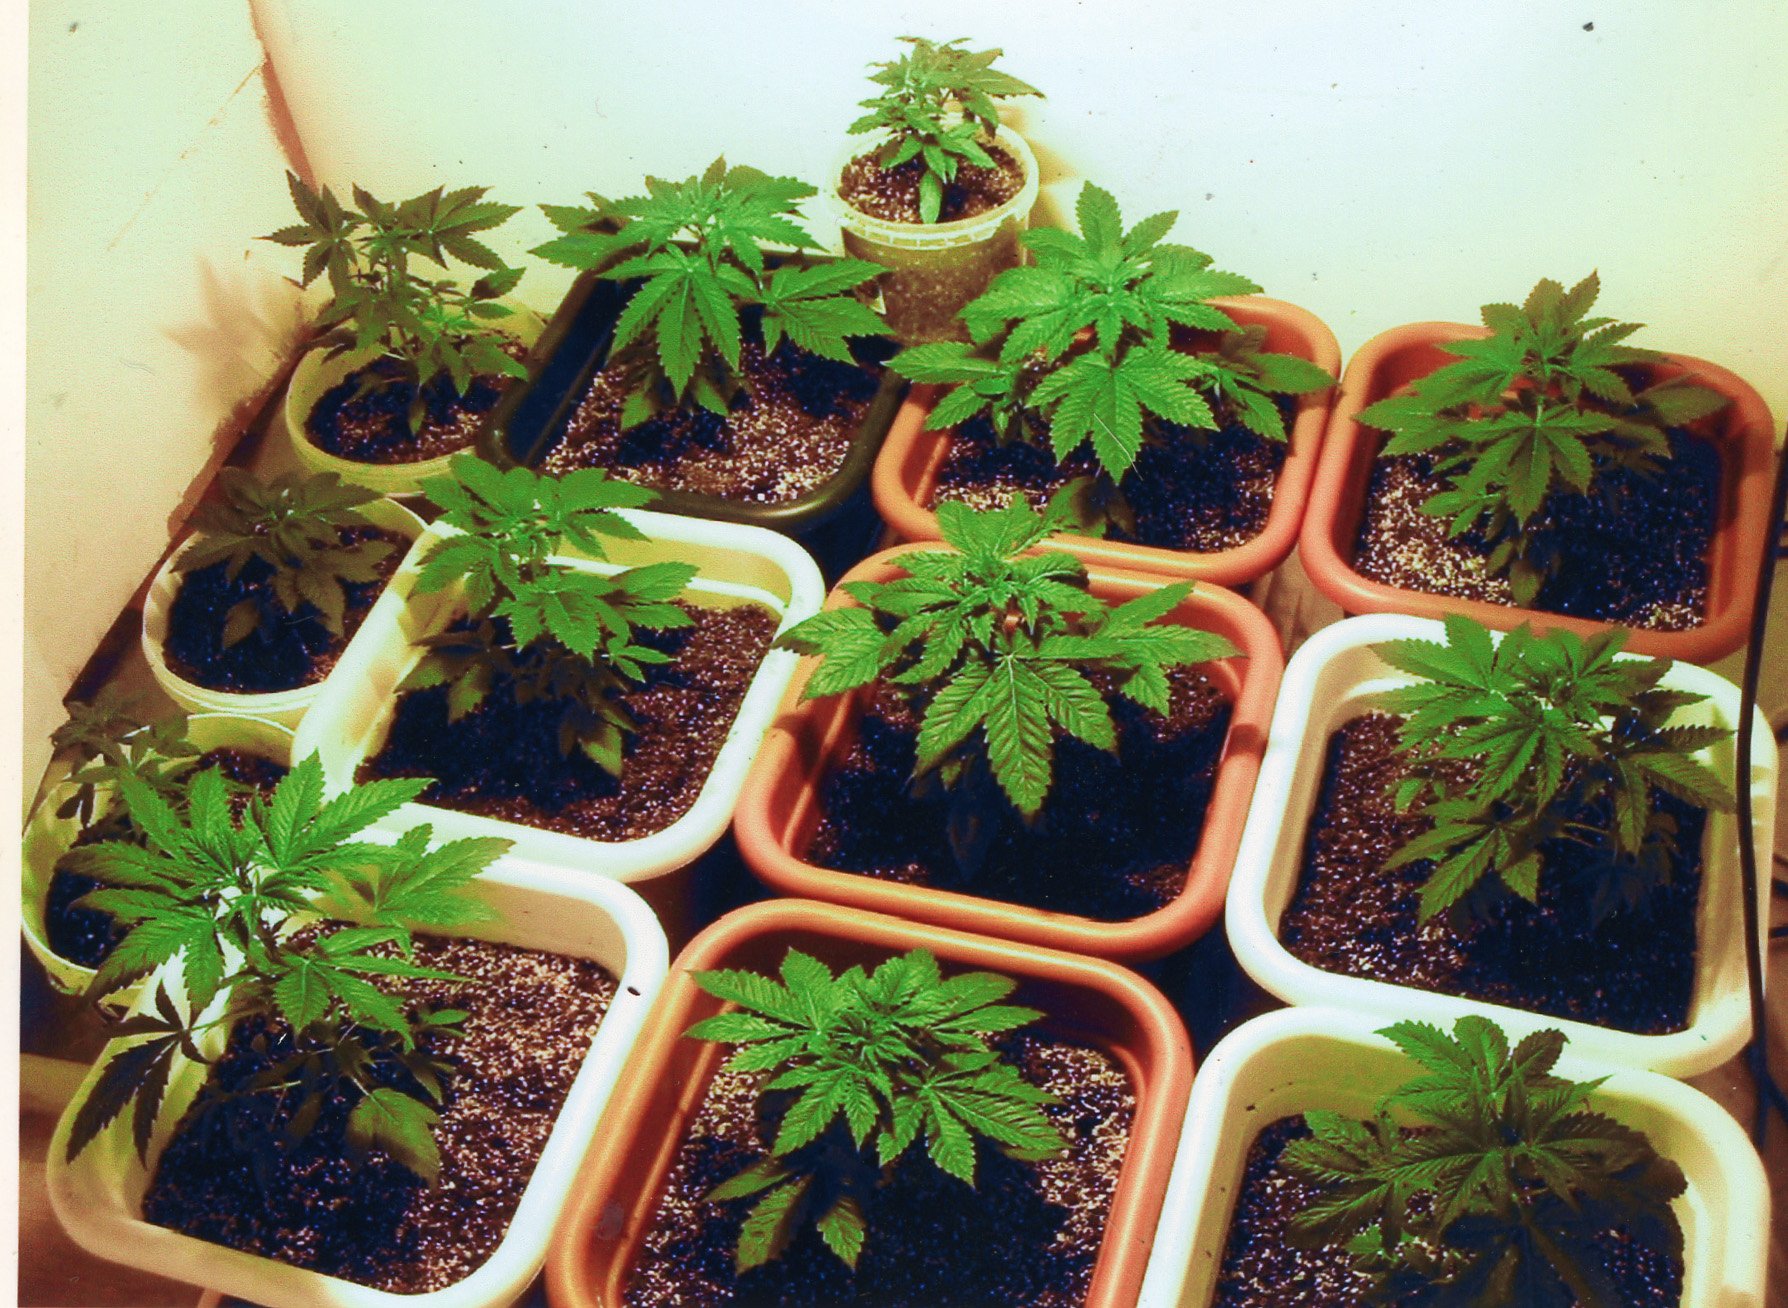 piantagione marijuana palaghiaccio pinerolo